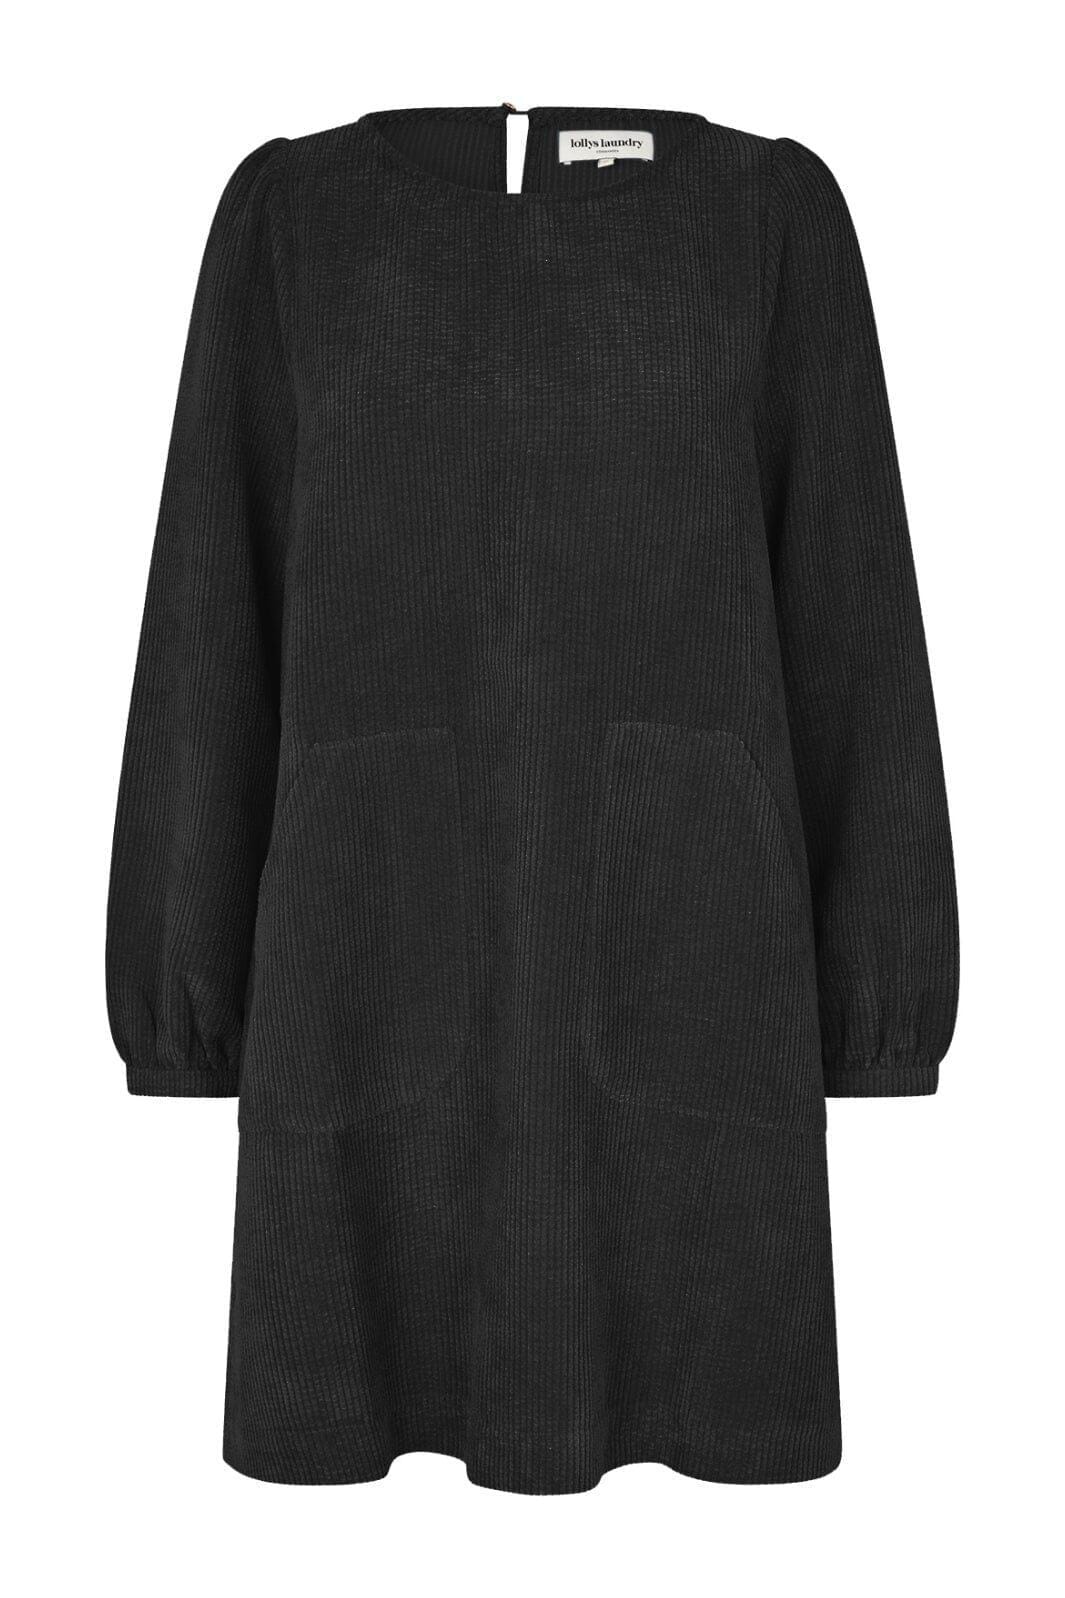 Lollys Laundry - Carlall Short Dress Ls - 99 Black Kjoler 